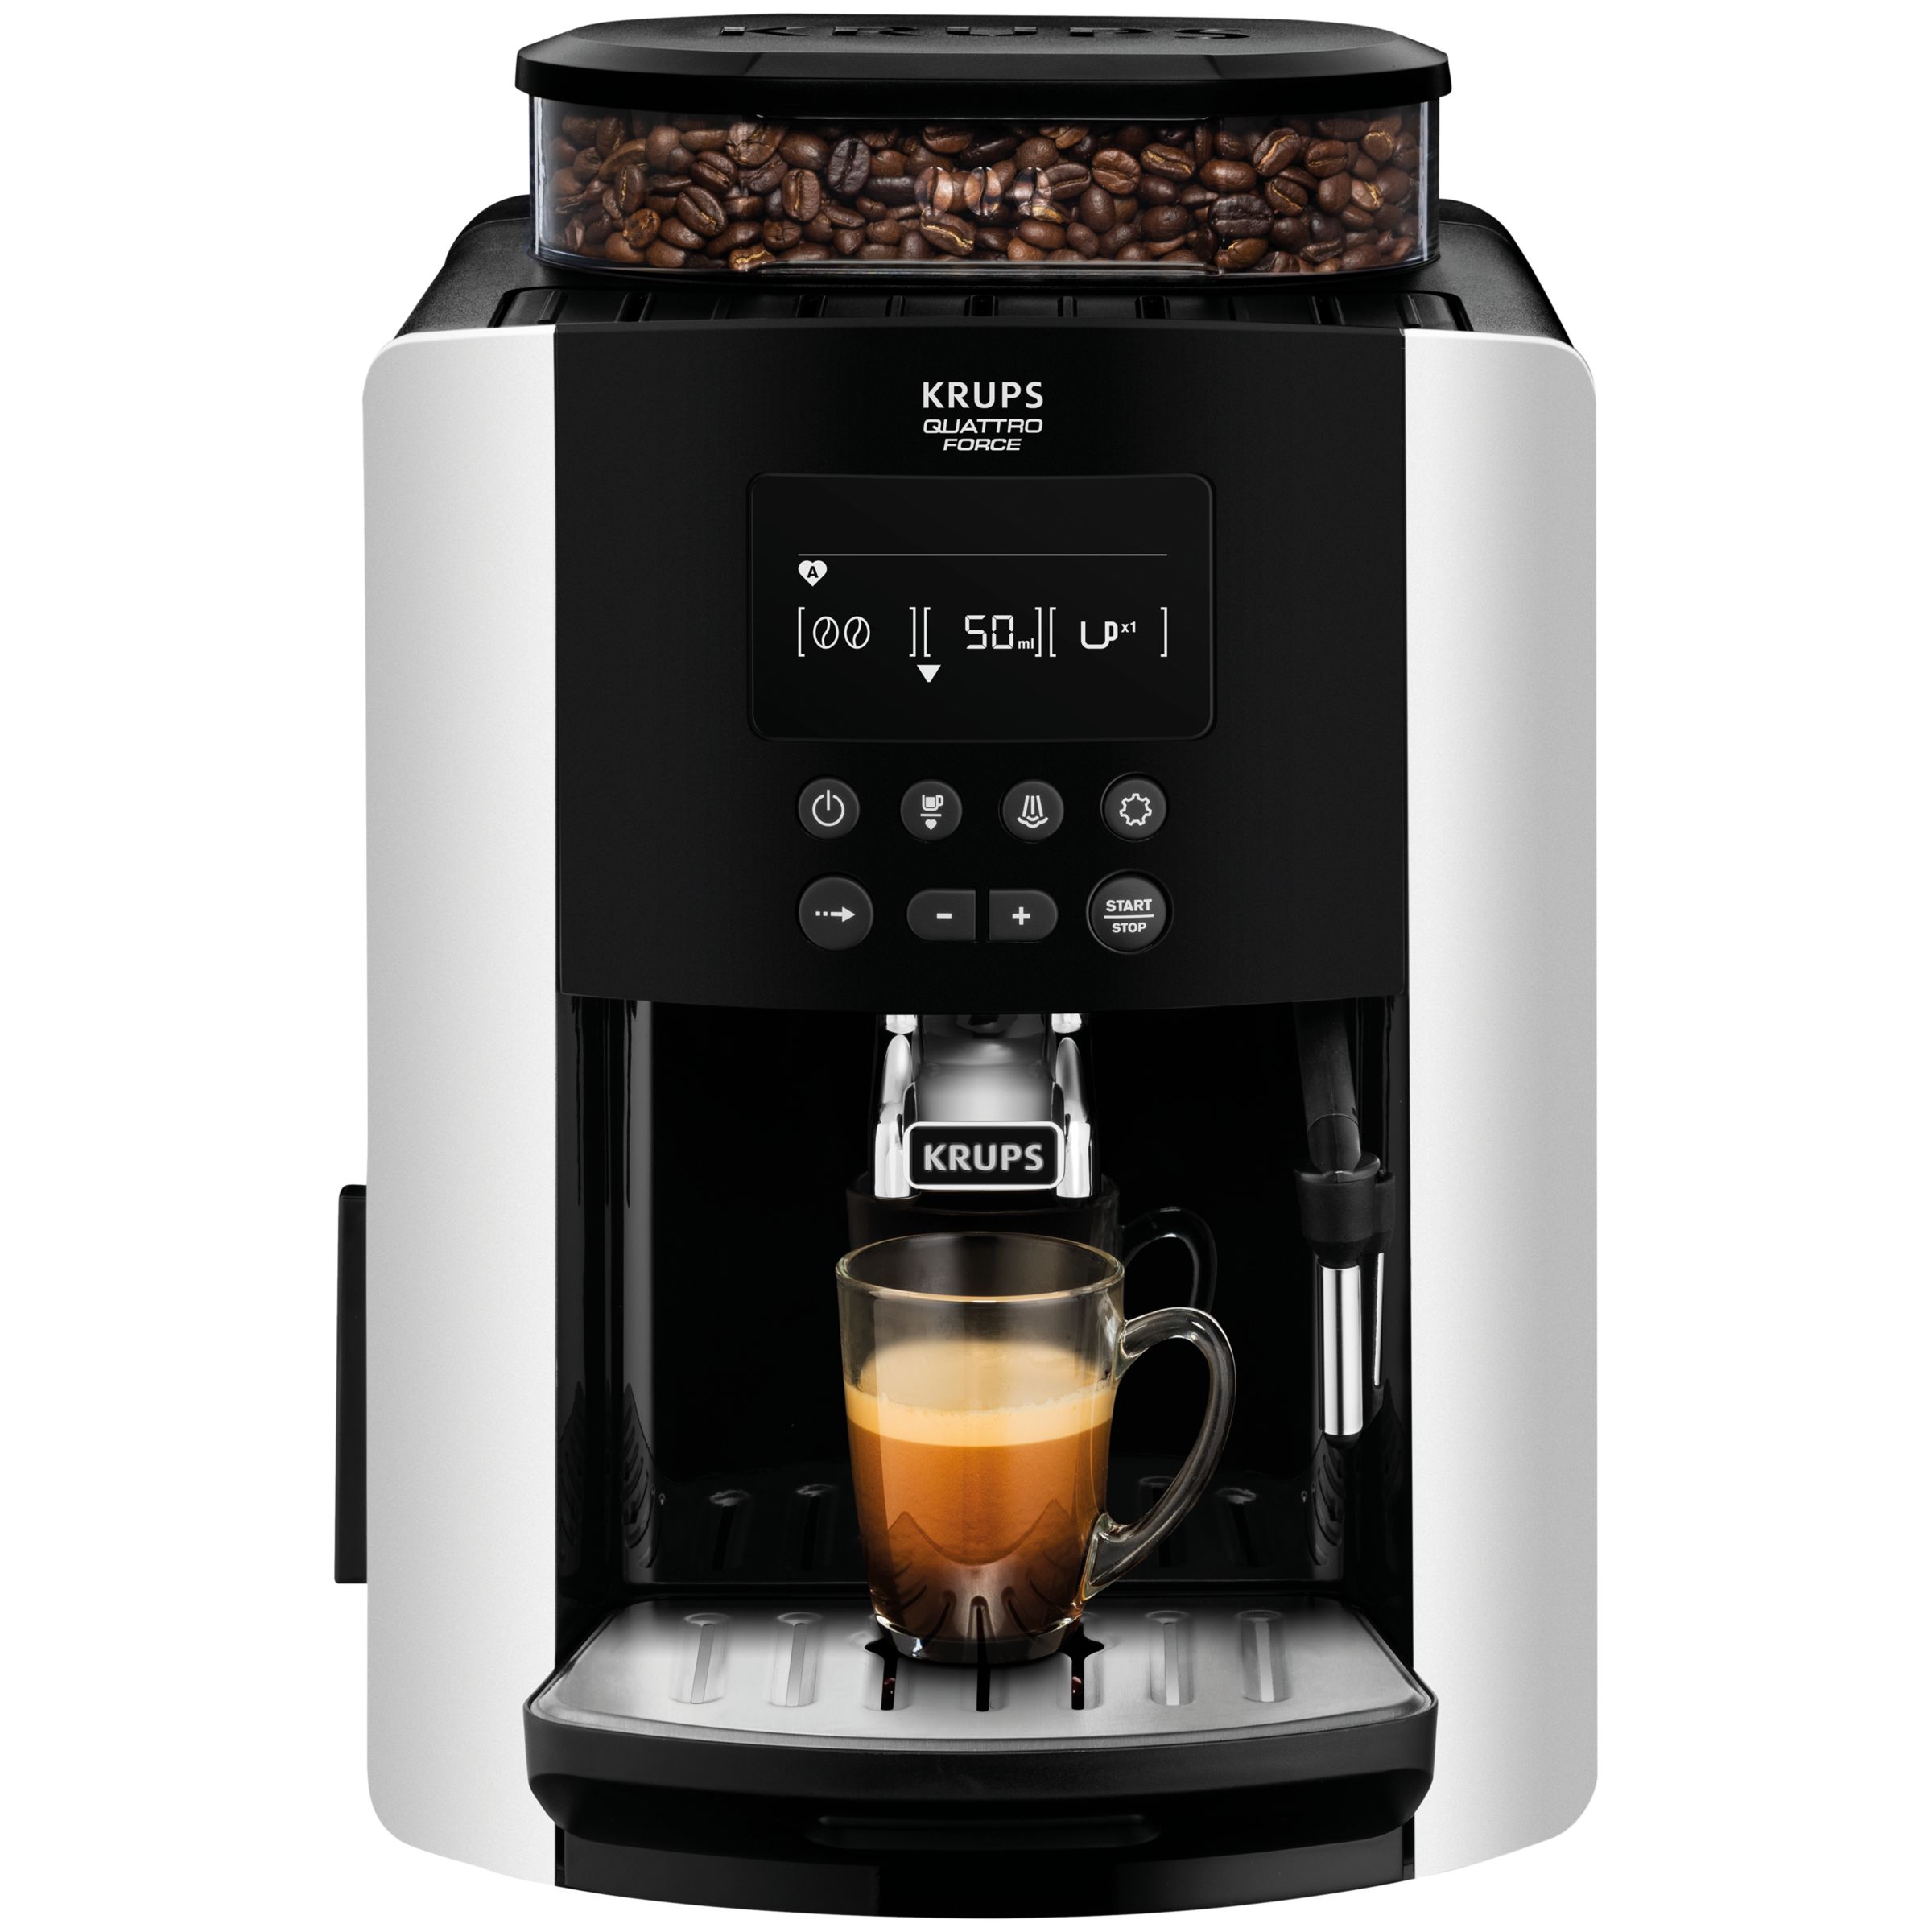 KRUPS EA817840 Arabica Digital Beantocup Coffee Machine, Silver at